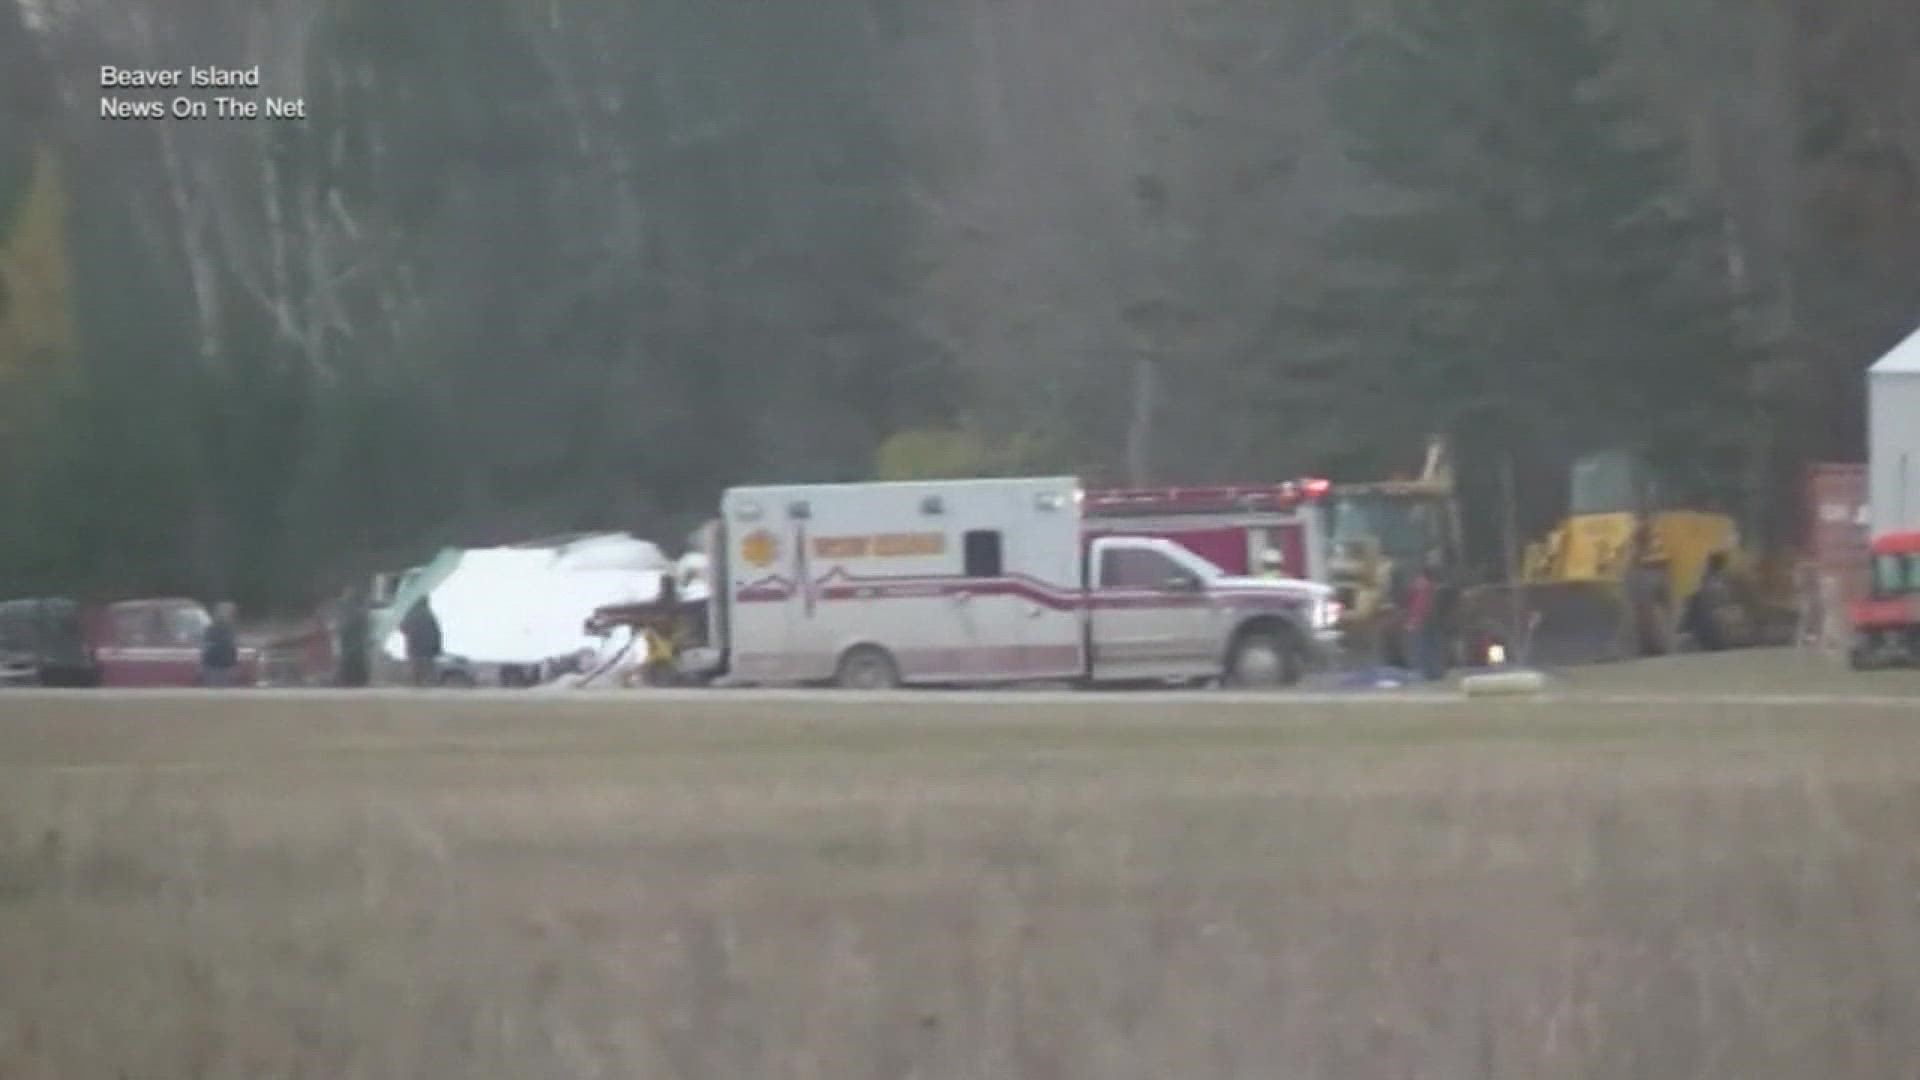 The latest on the deadly Beaver Island plane crash